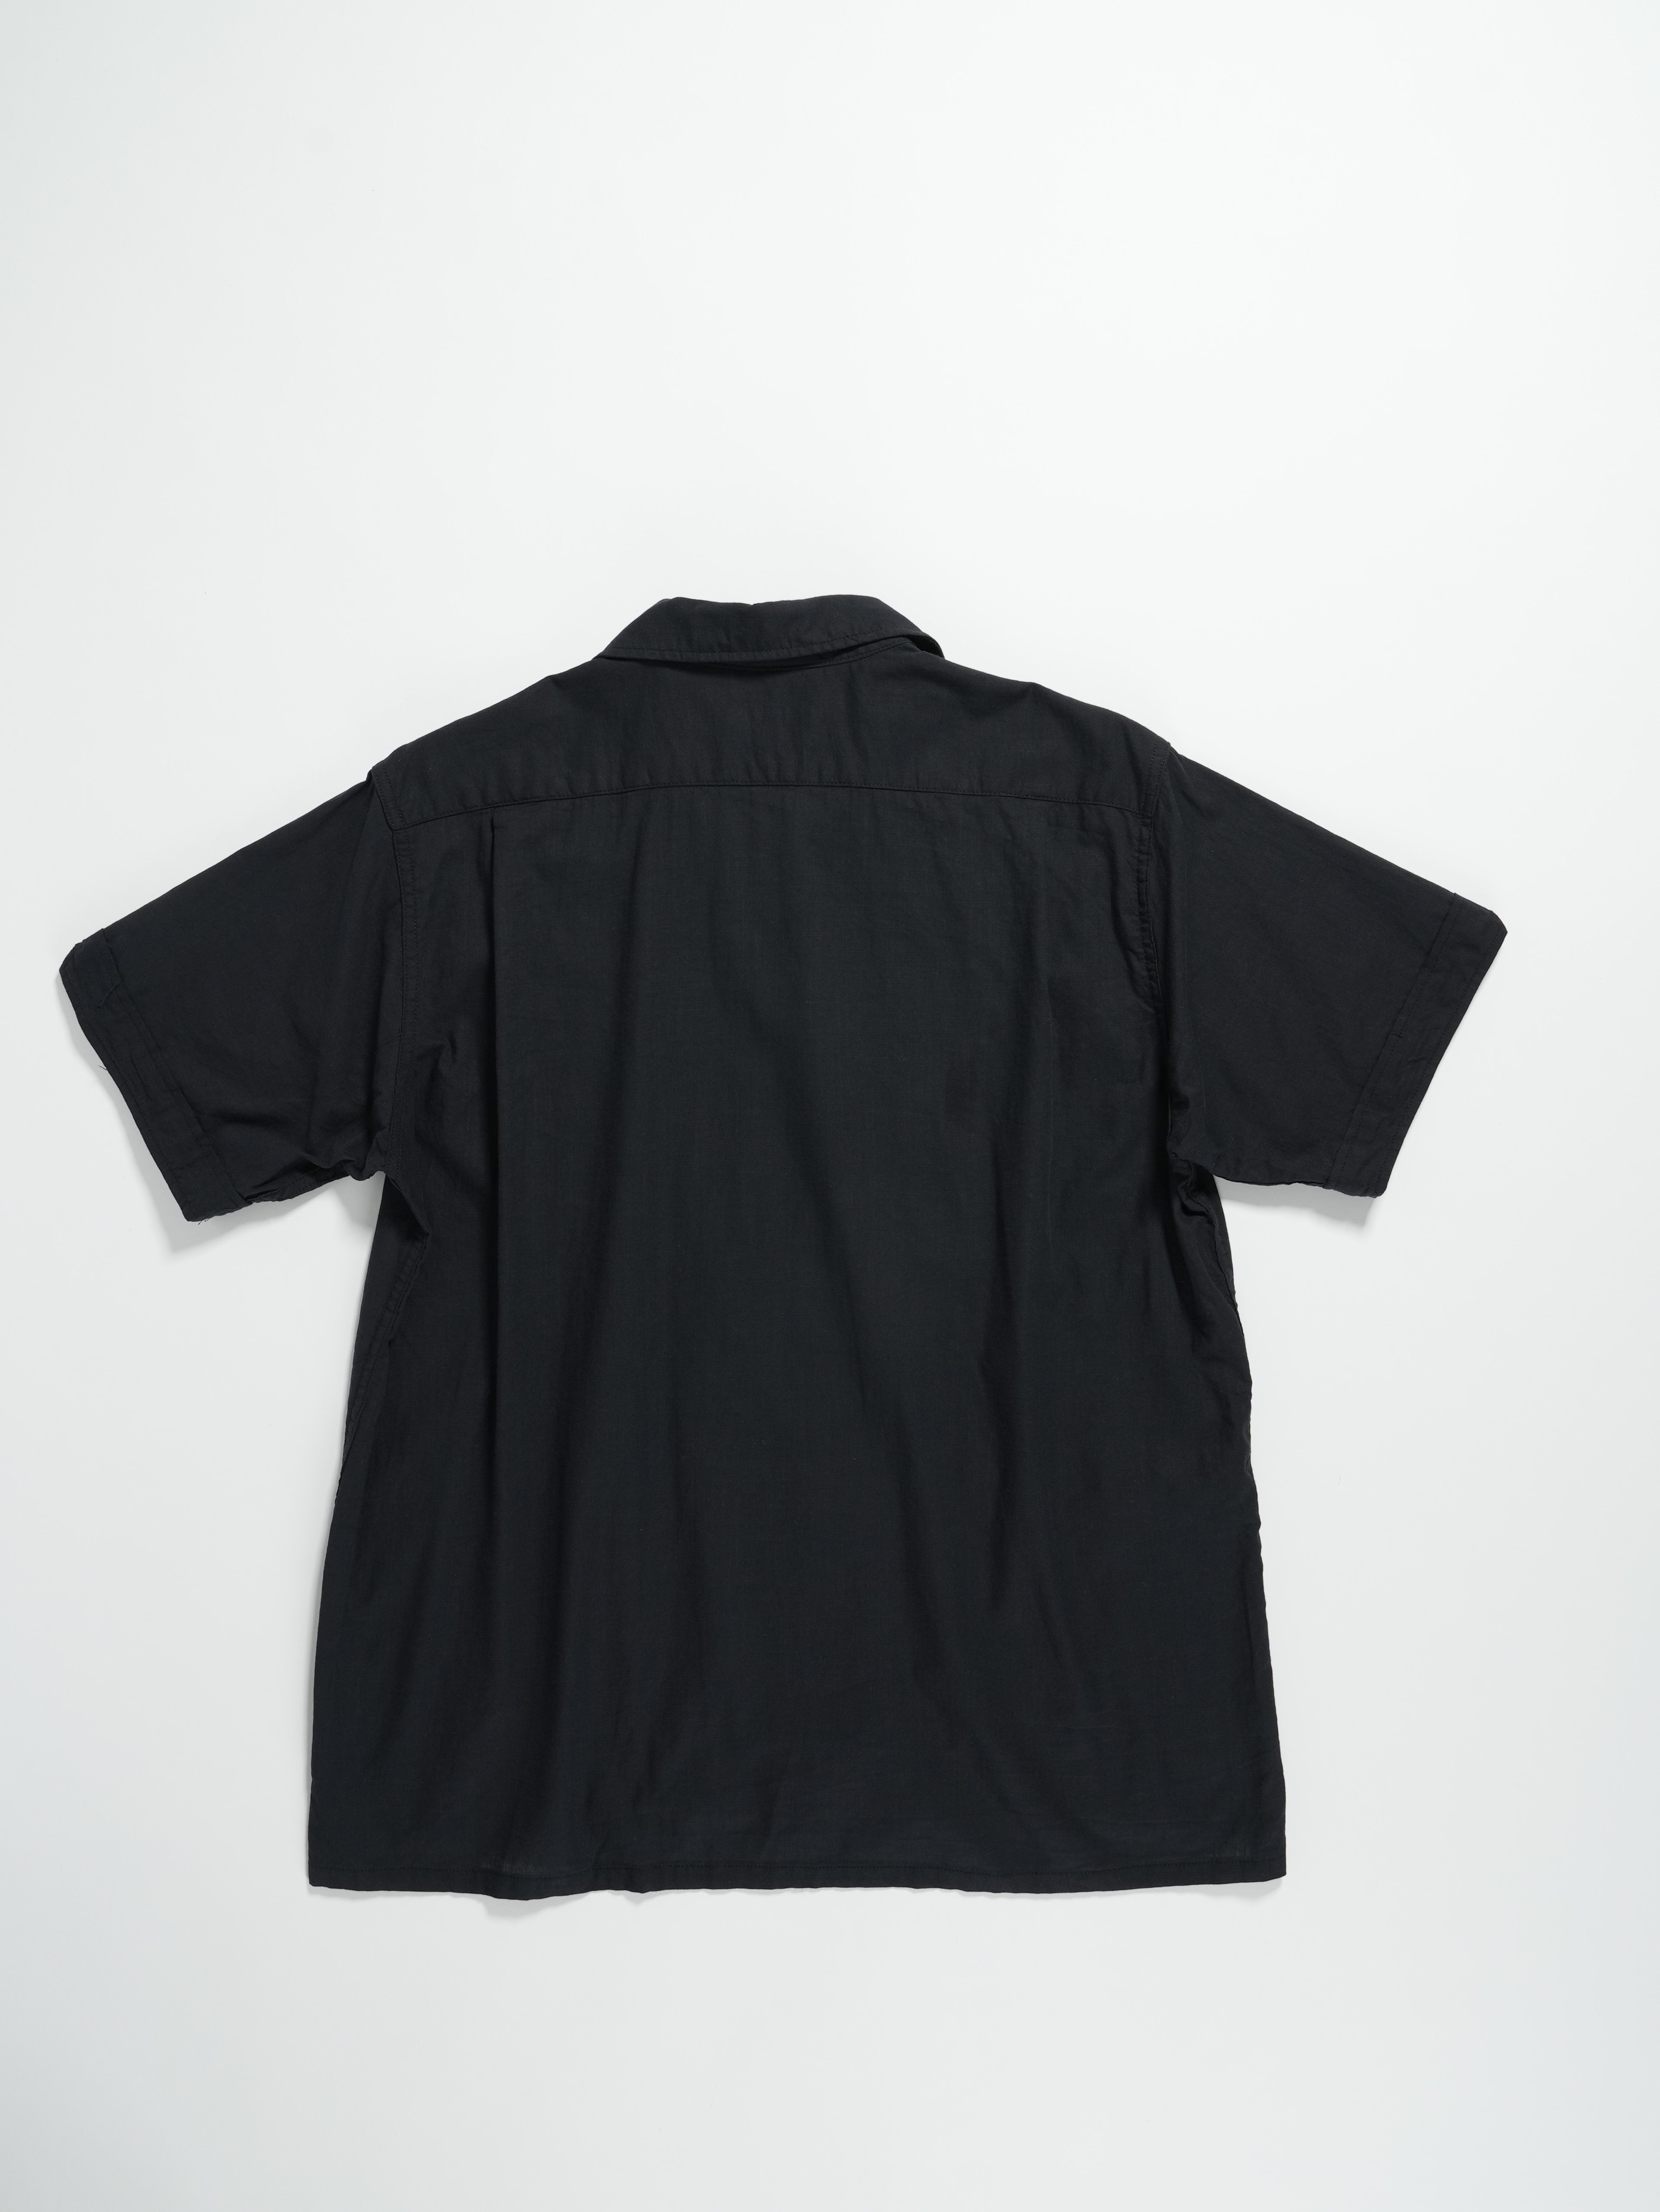 Camp Shirt - Black Cotton Handkerchief